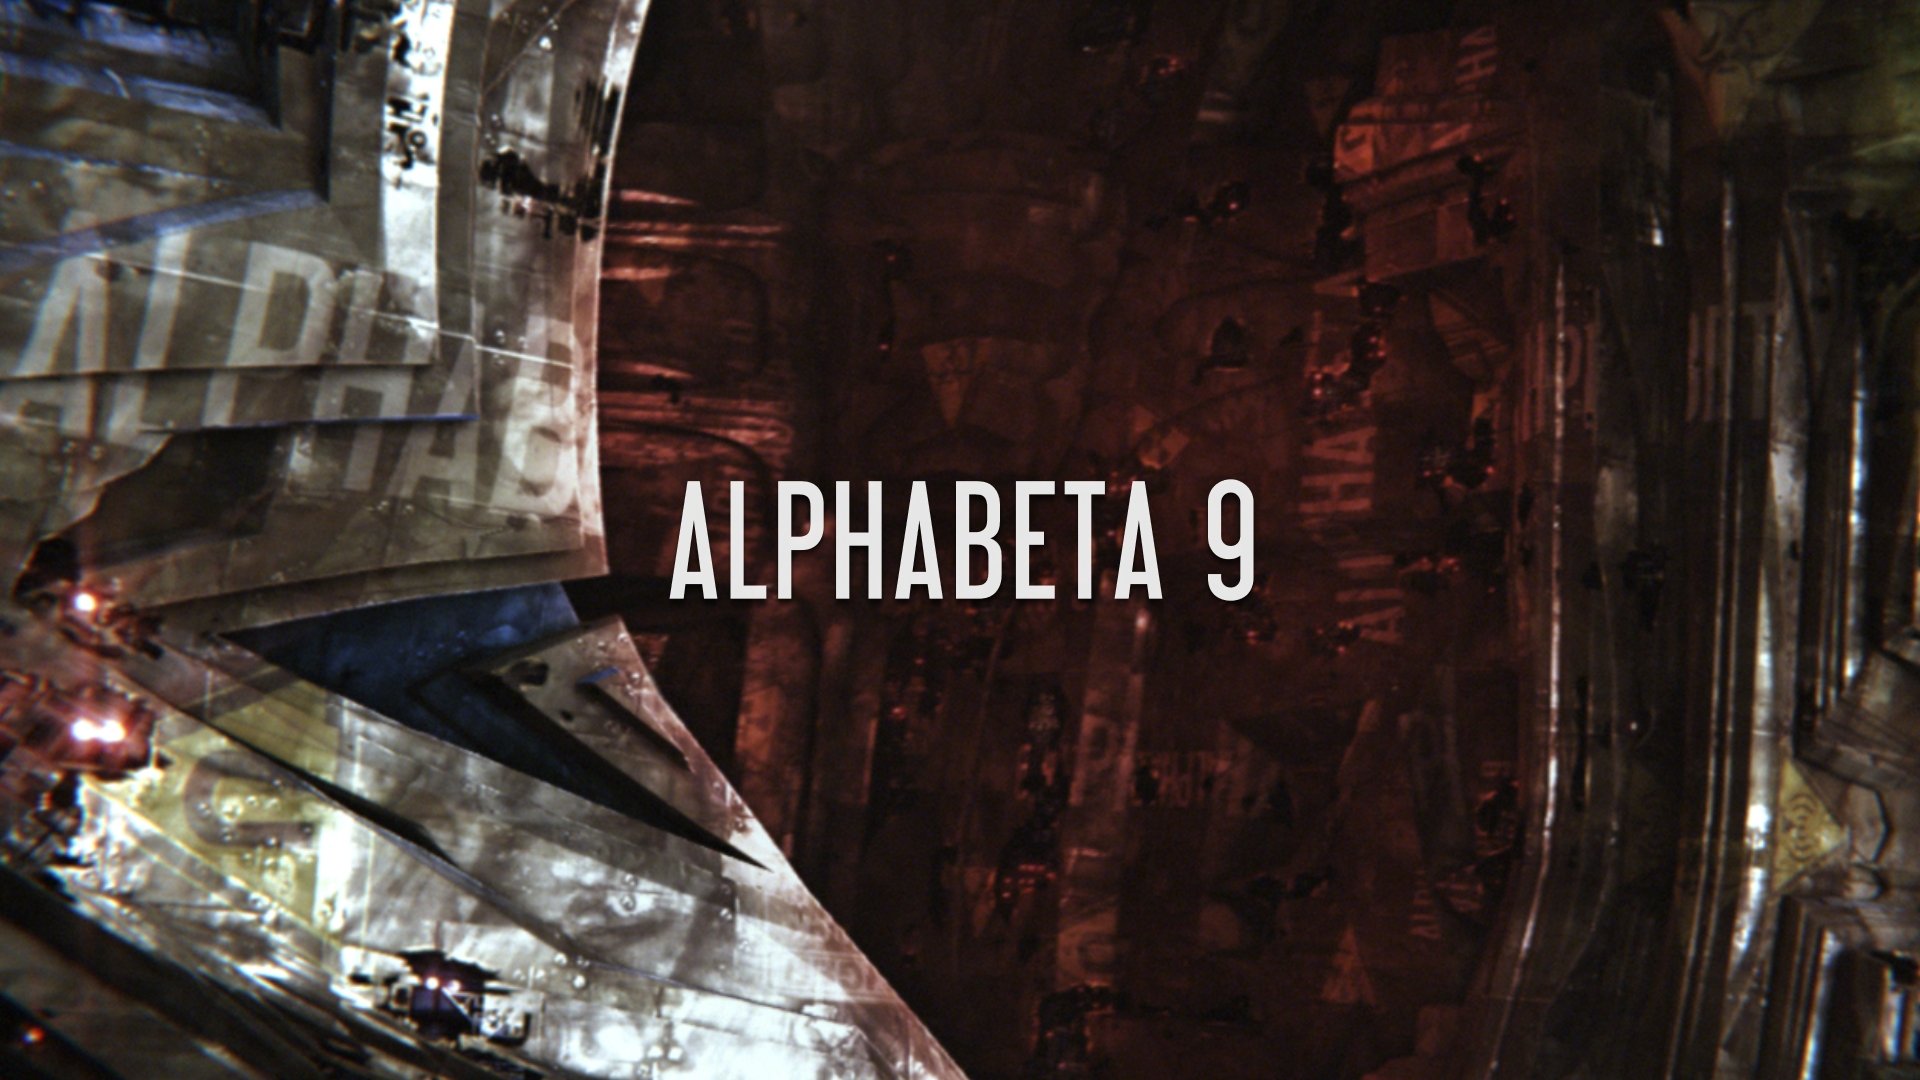 Alphabeta9